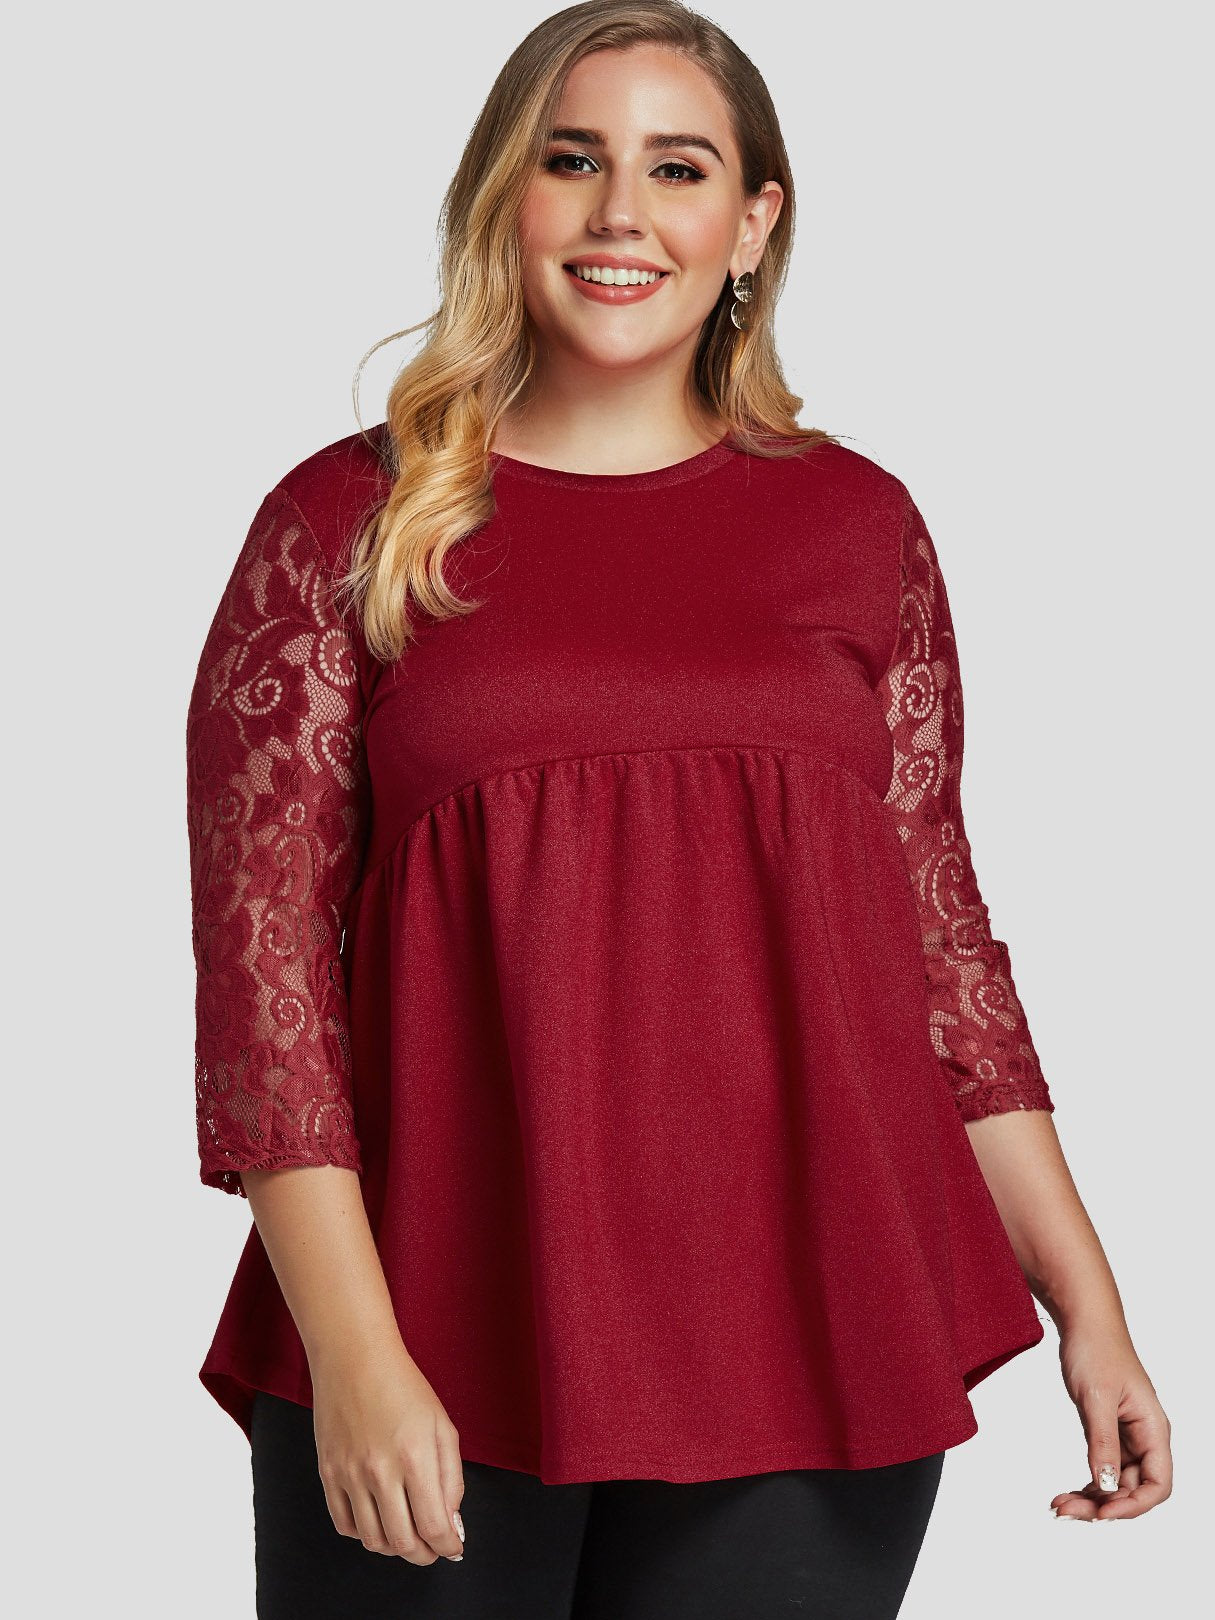 Wholesale Round Neck Plain Lace Long Sleeve Flounced Hem Red Plus Size Tops